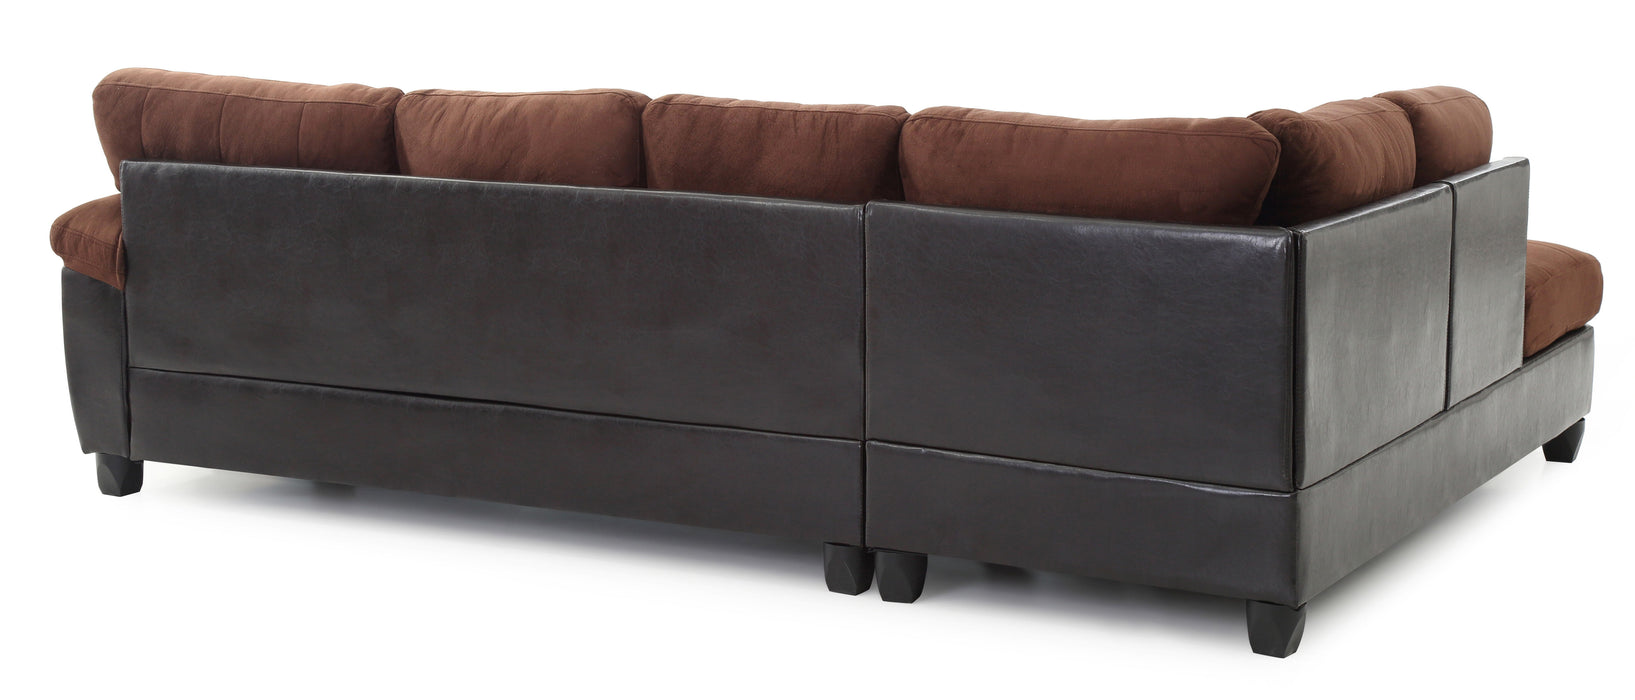 Glory Furniture - Glory Furniture Gallant Sectional, Chocolate - Microfiber